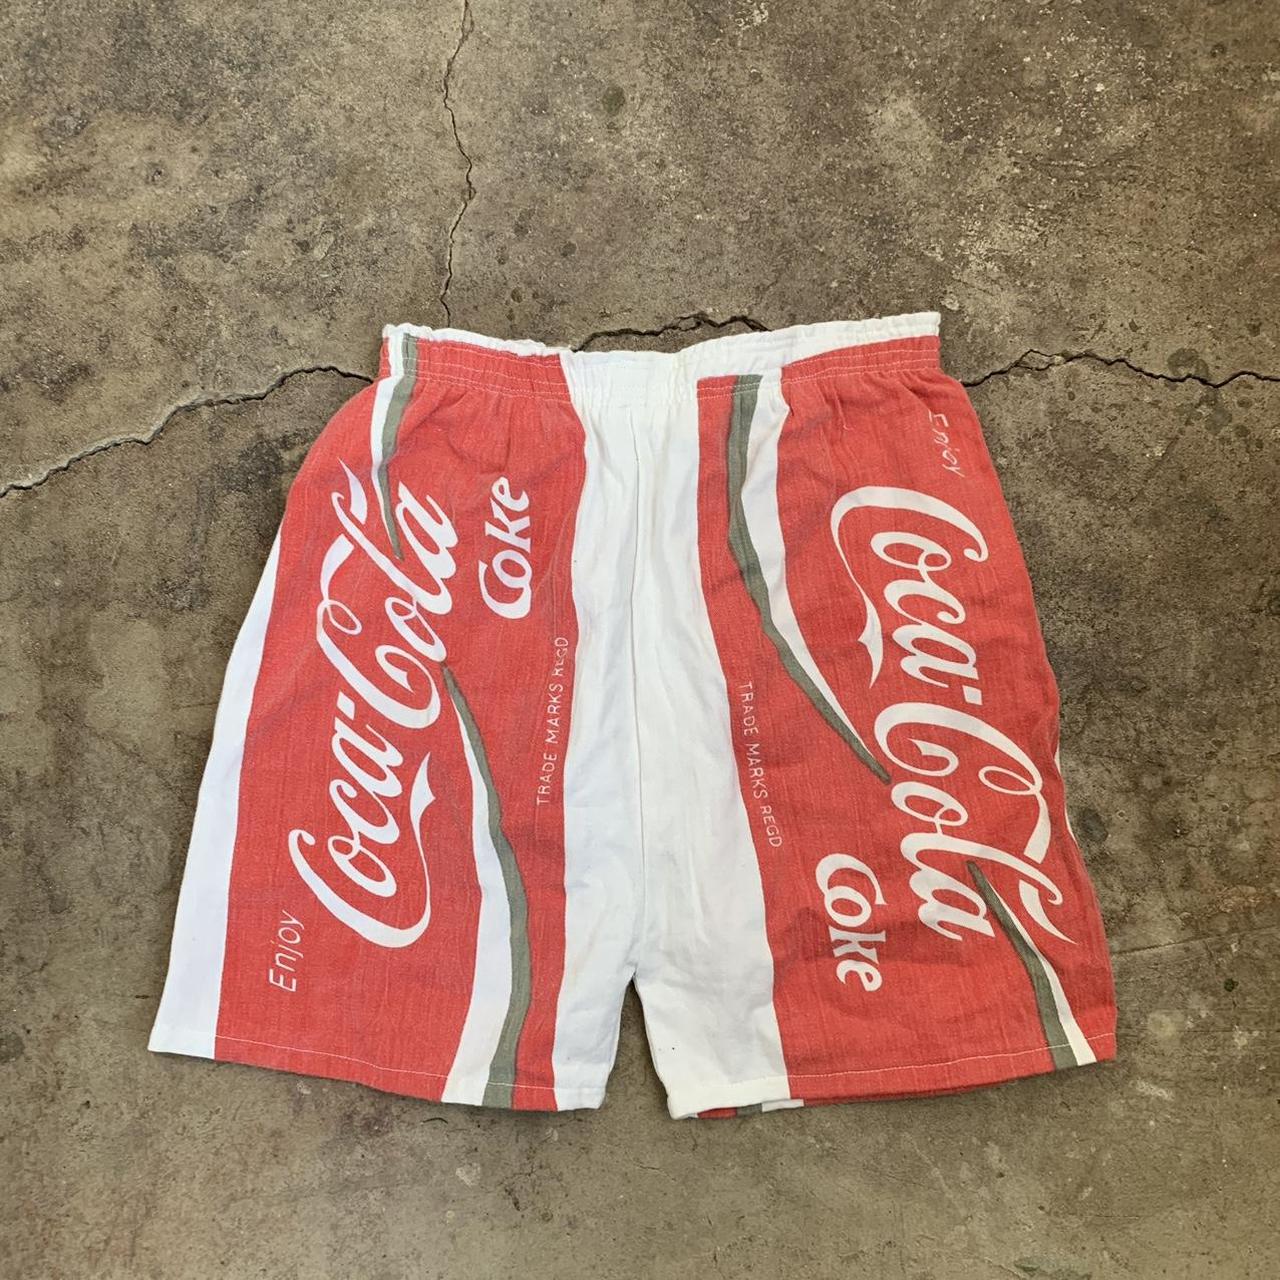 Coco cola Vintage all over print shorts More... - Depop